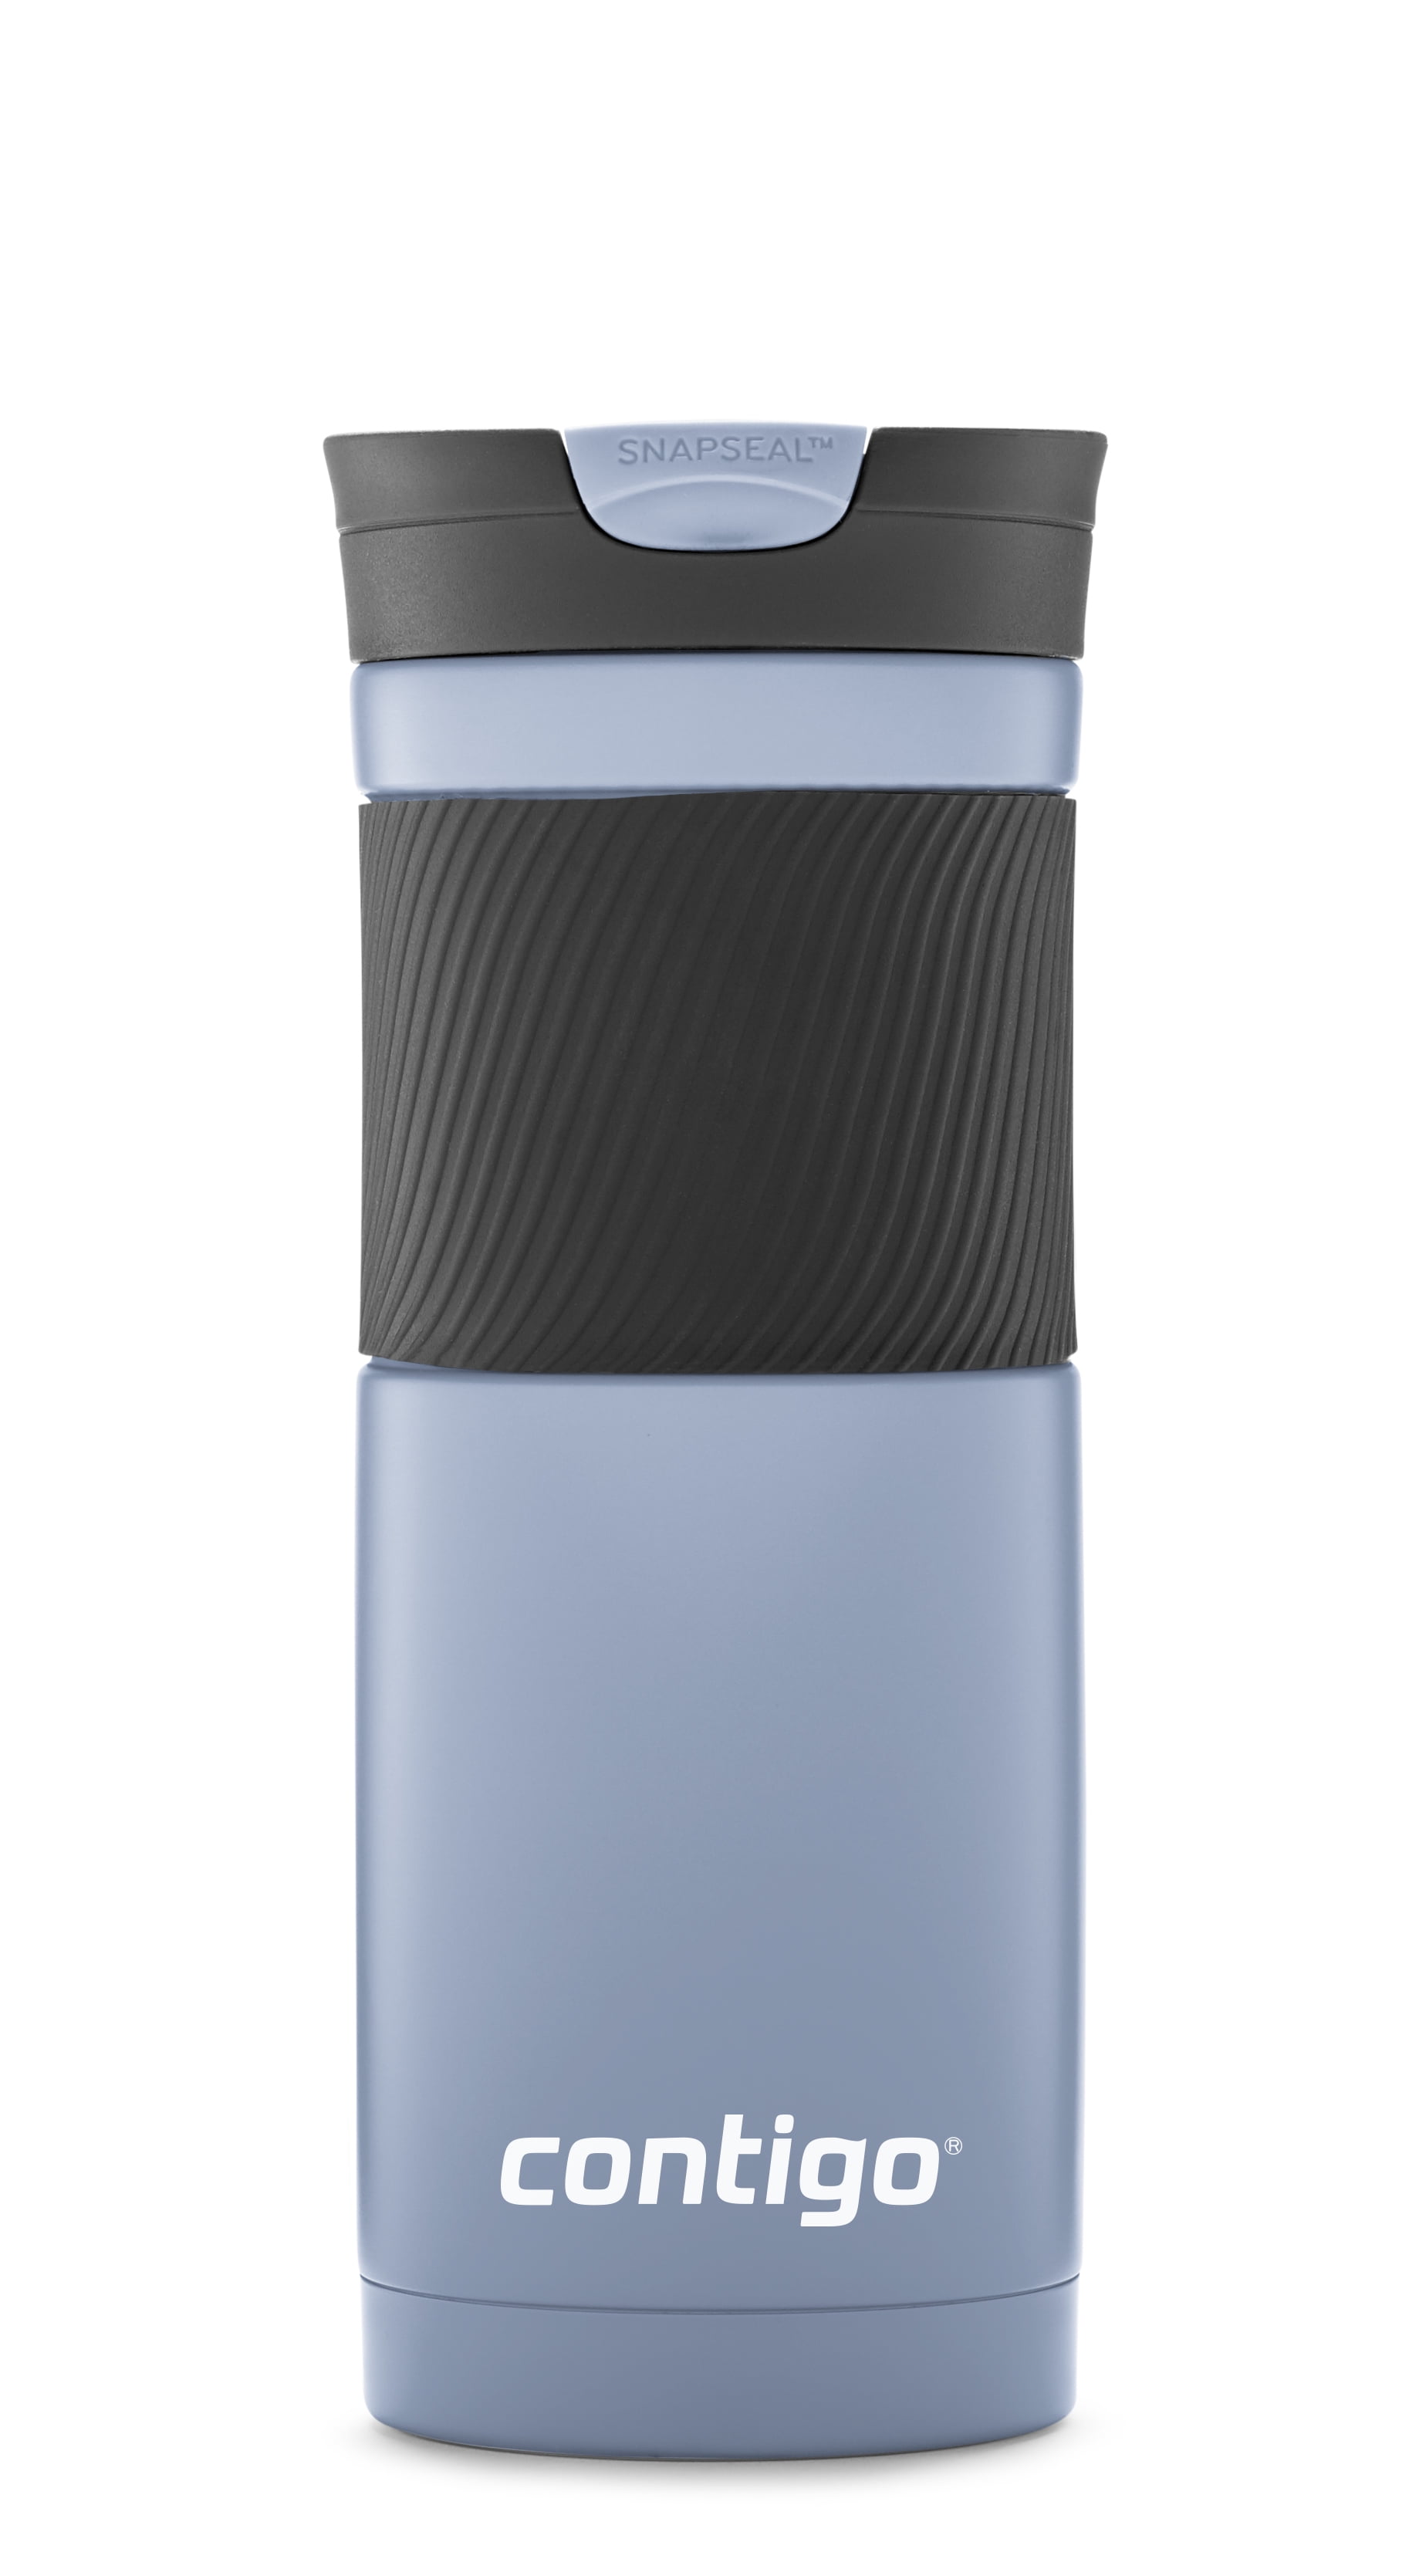 AIEVE 4 Pack Replacement Seal for Contigo Snapseal Byron Coffe Mug, 6 Pack  Rubber Stopper for Contigo Snapseal Coffee Travel Mug